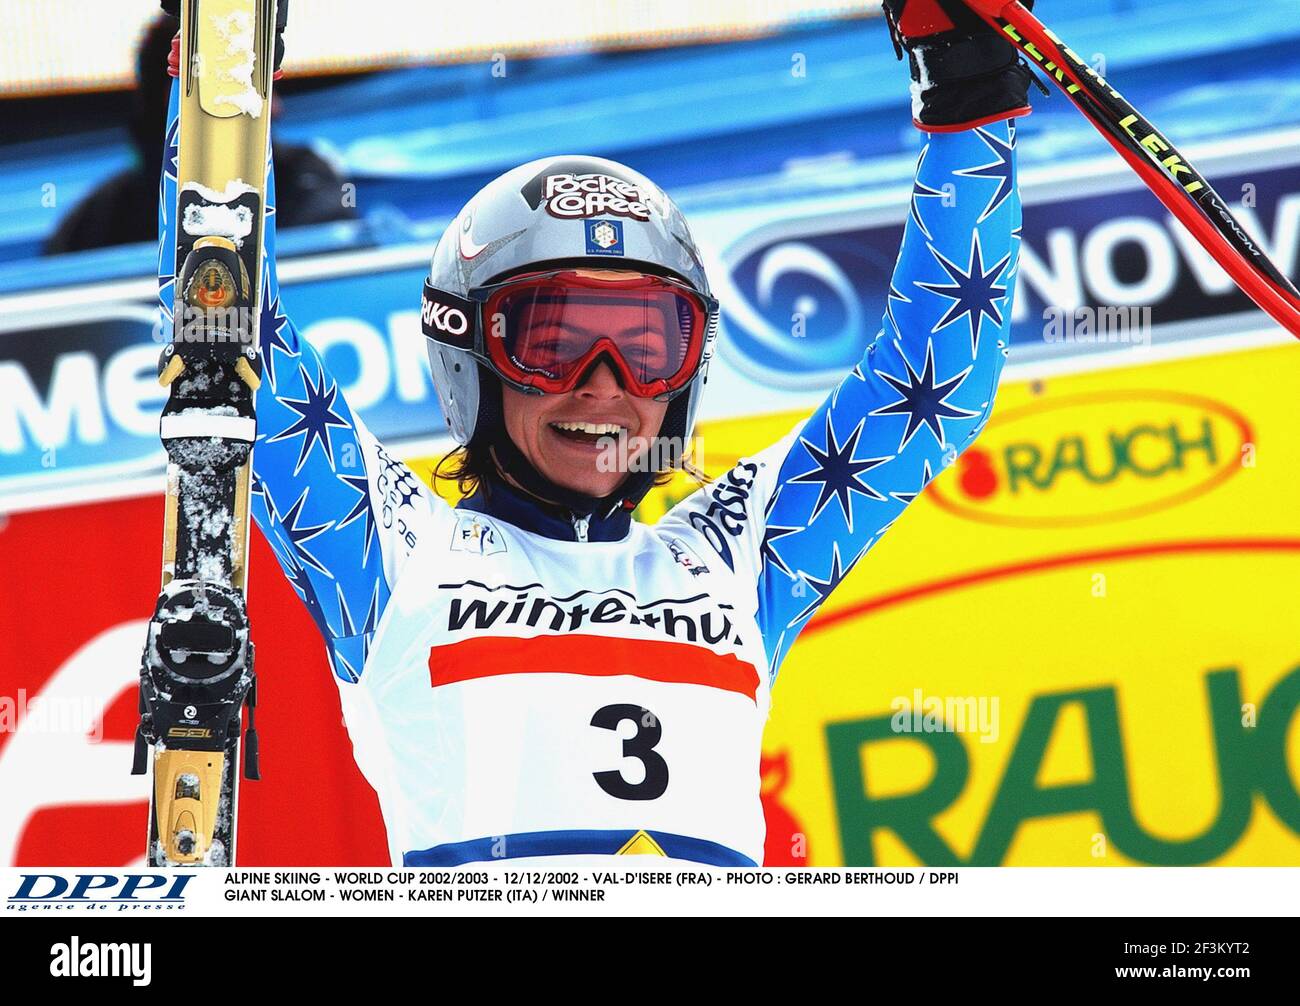 ALPINE SKIING - WORLD CUP 2002/2003 - 12/12/2002 - VAL-D'ISERE (FRA) - PHOTO : GERARD BERTHOUD / DPPI GIANT SLALOM - WOMEN - KAREN PUTZER (ITA) / WINNER Stock Photo